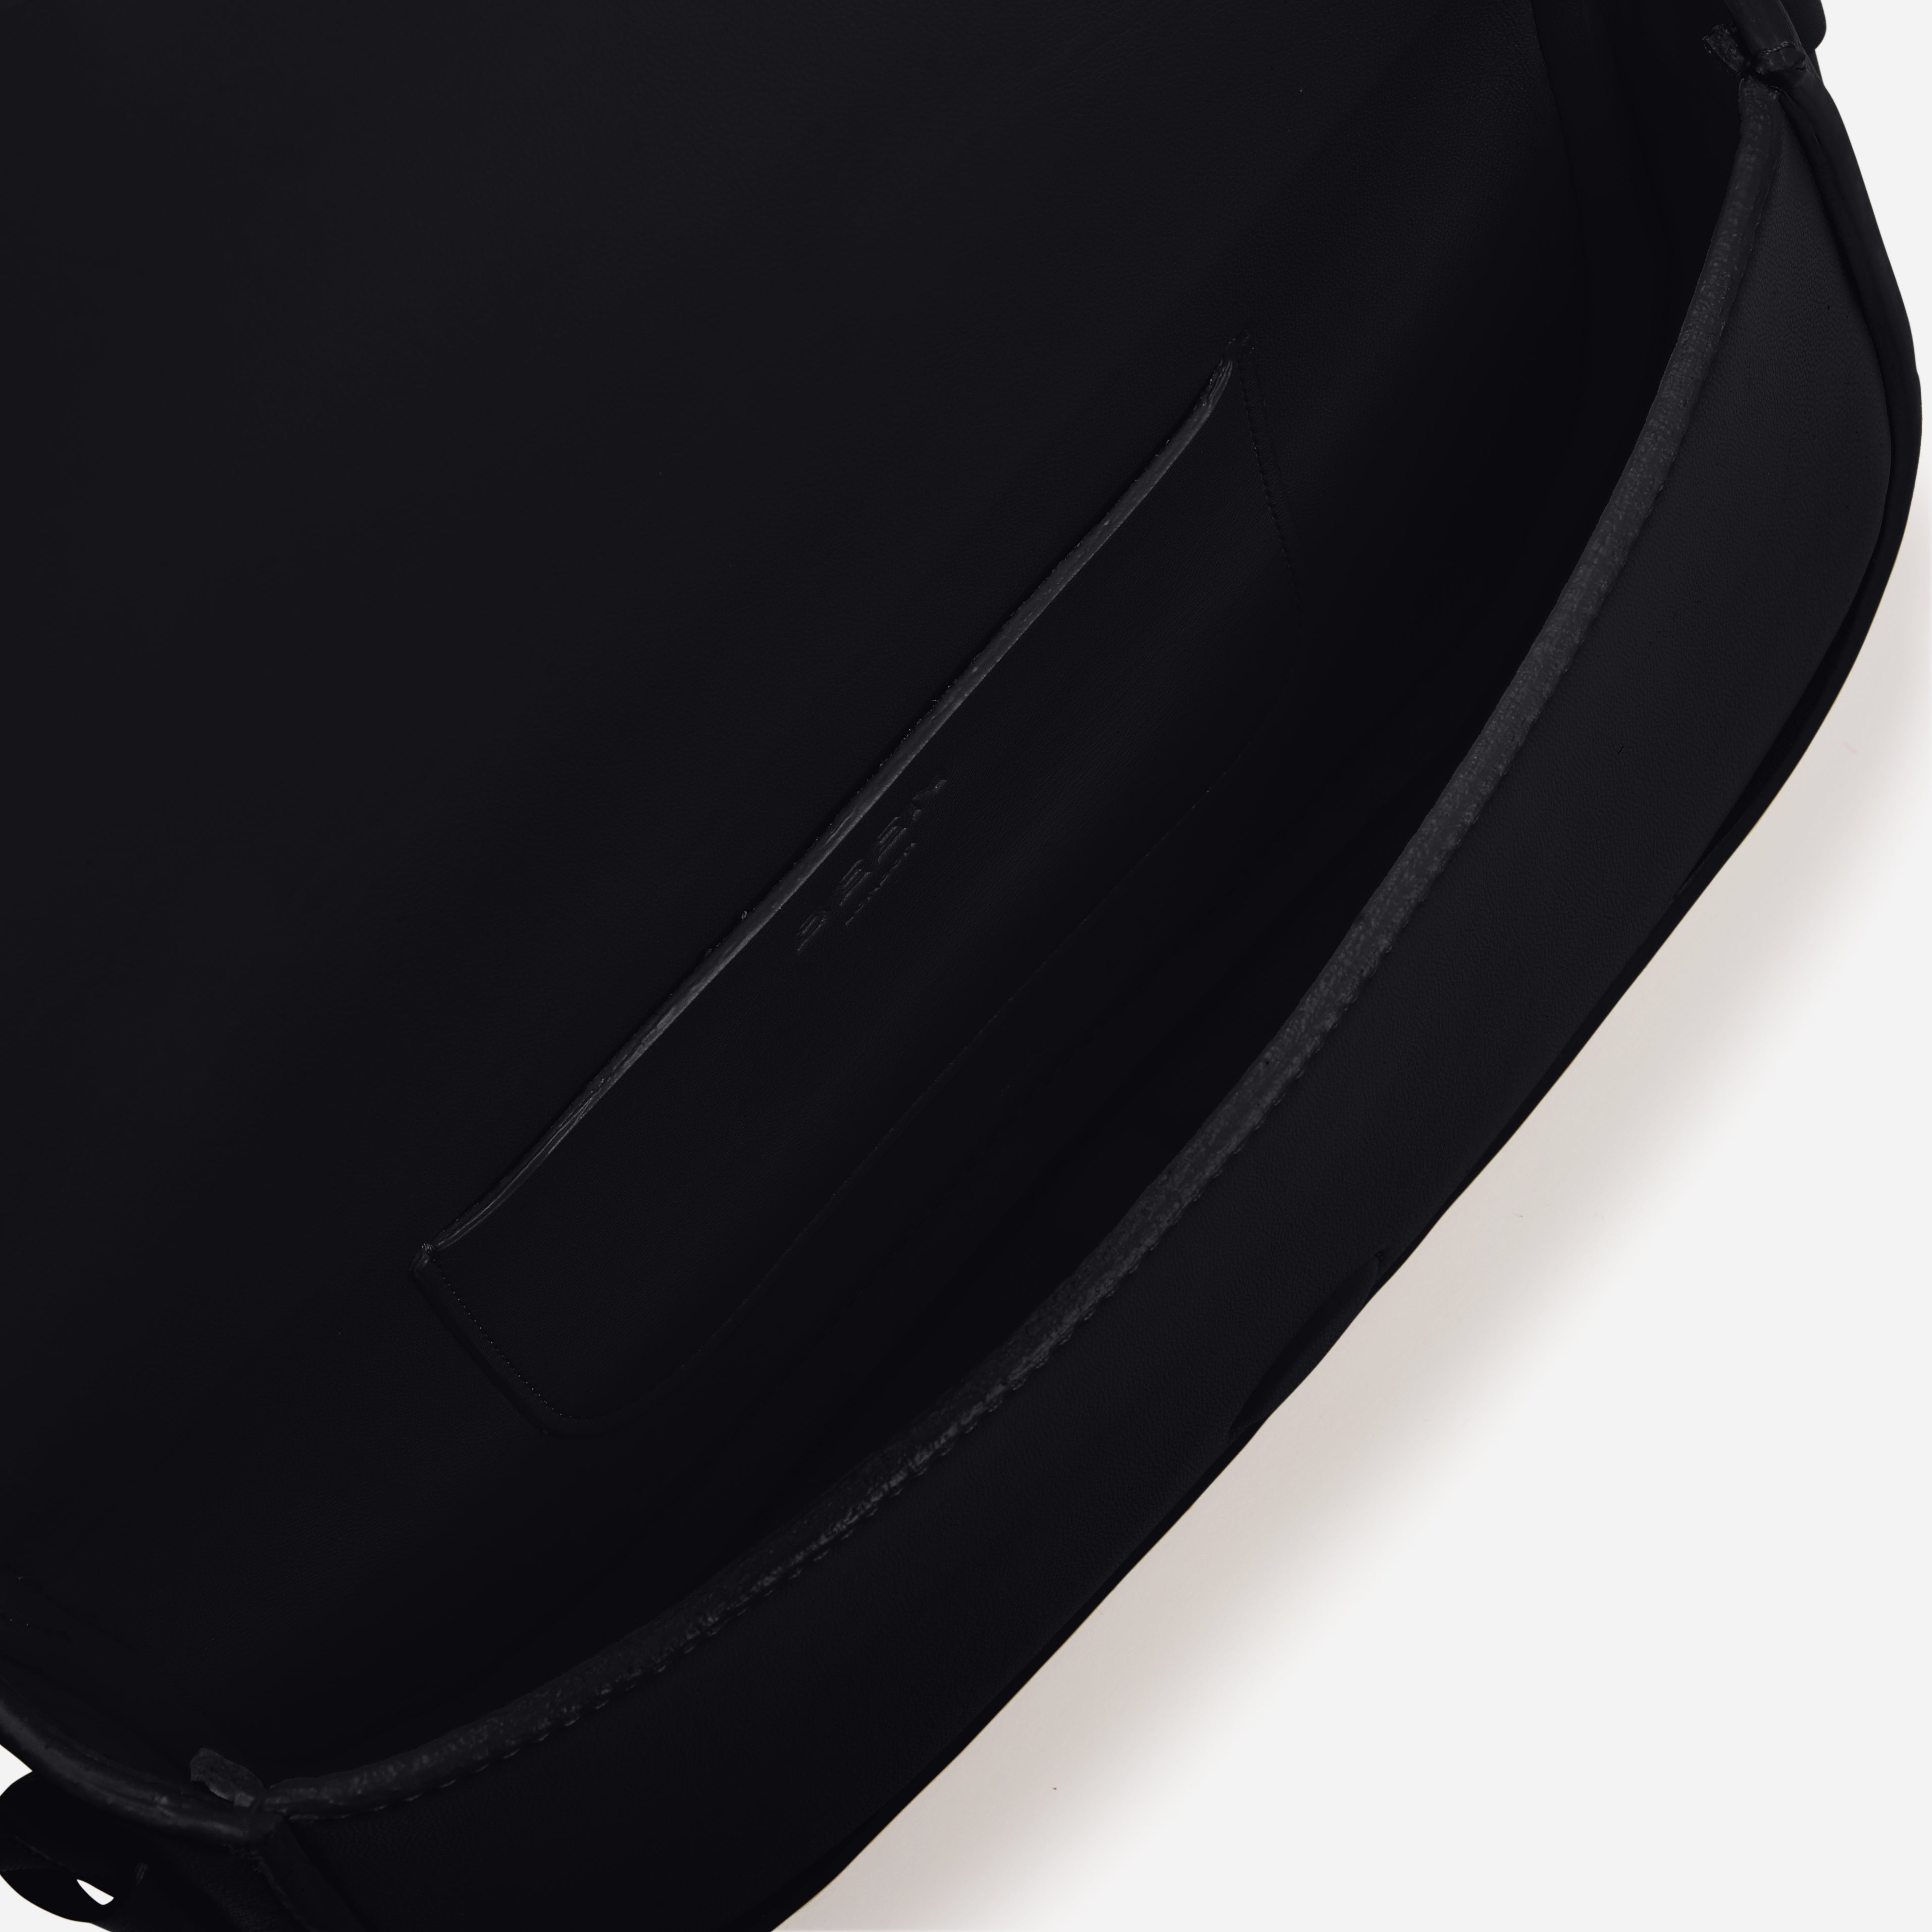 Millais Bag in Black Onyx spacious interior with card pocket